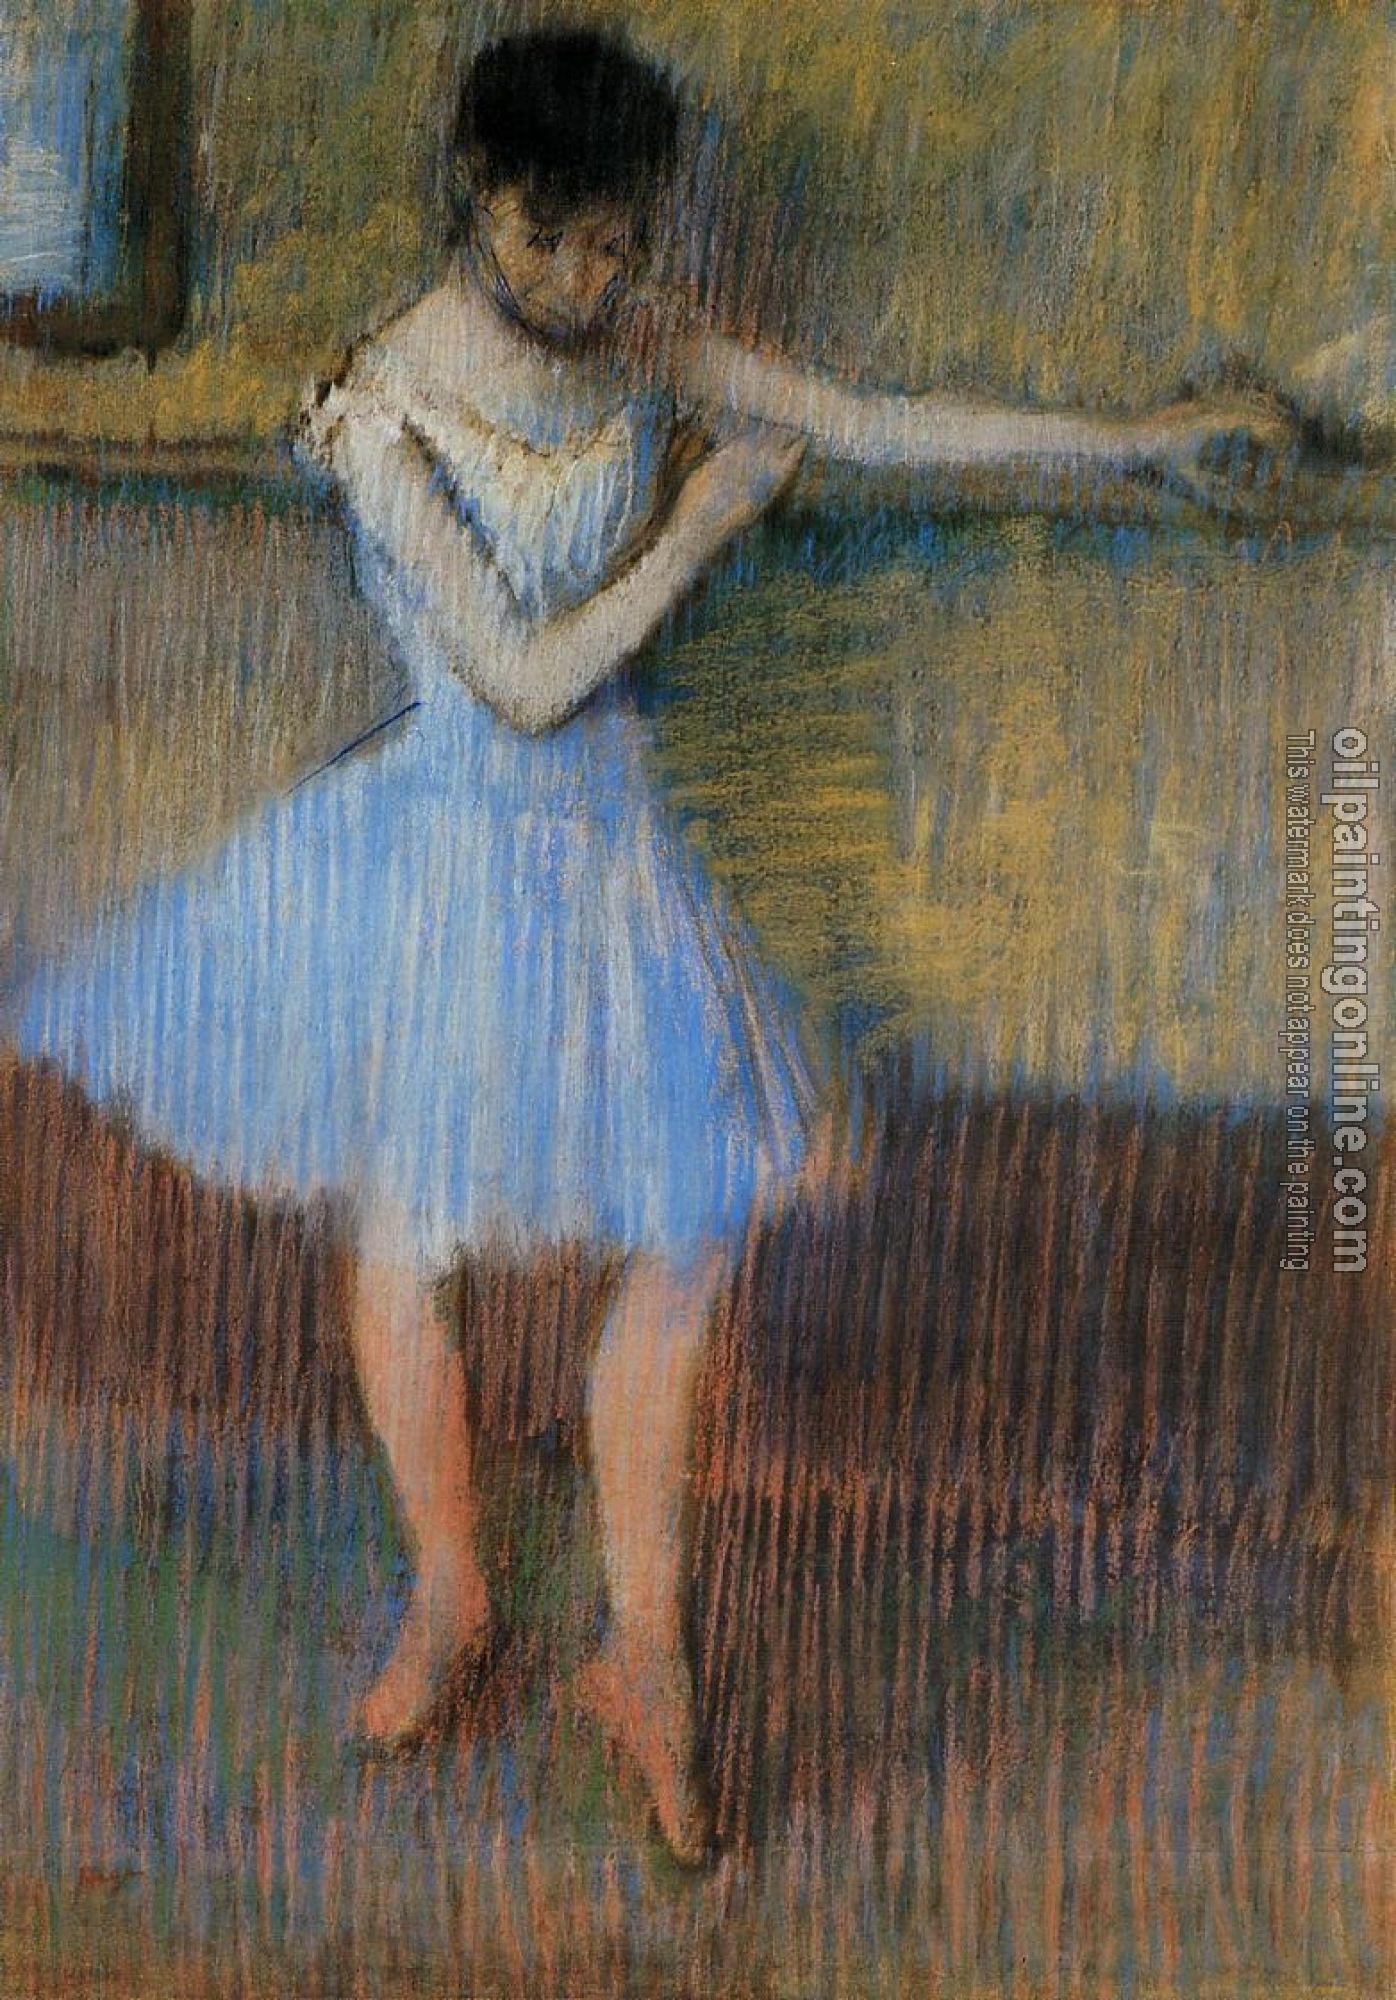 Degas, Edgar - Dancer in Blue at the Barre